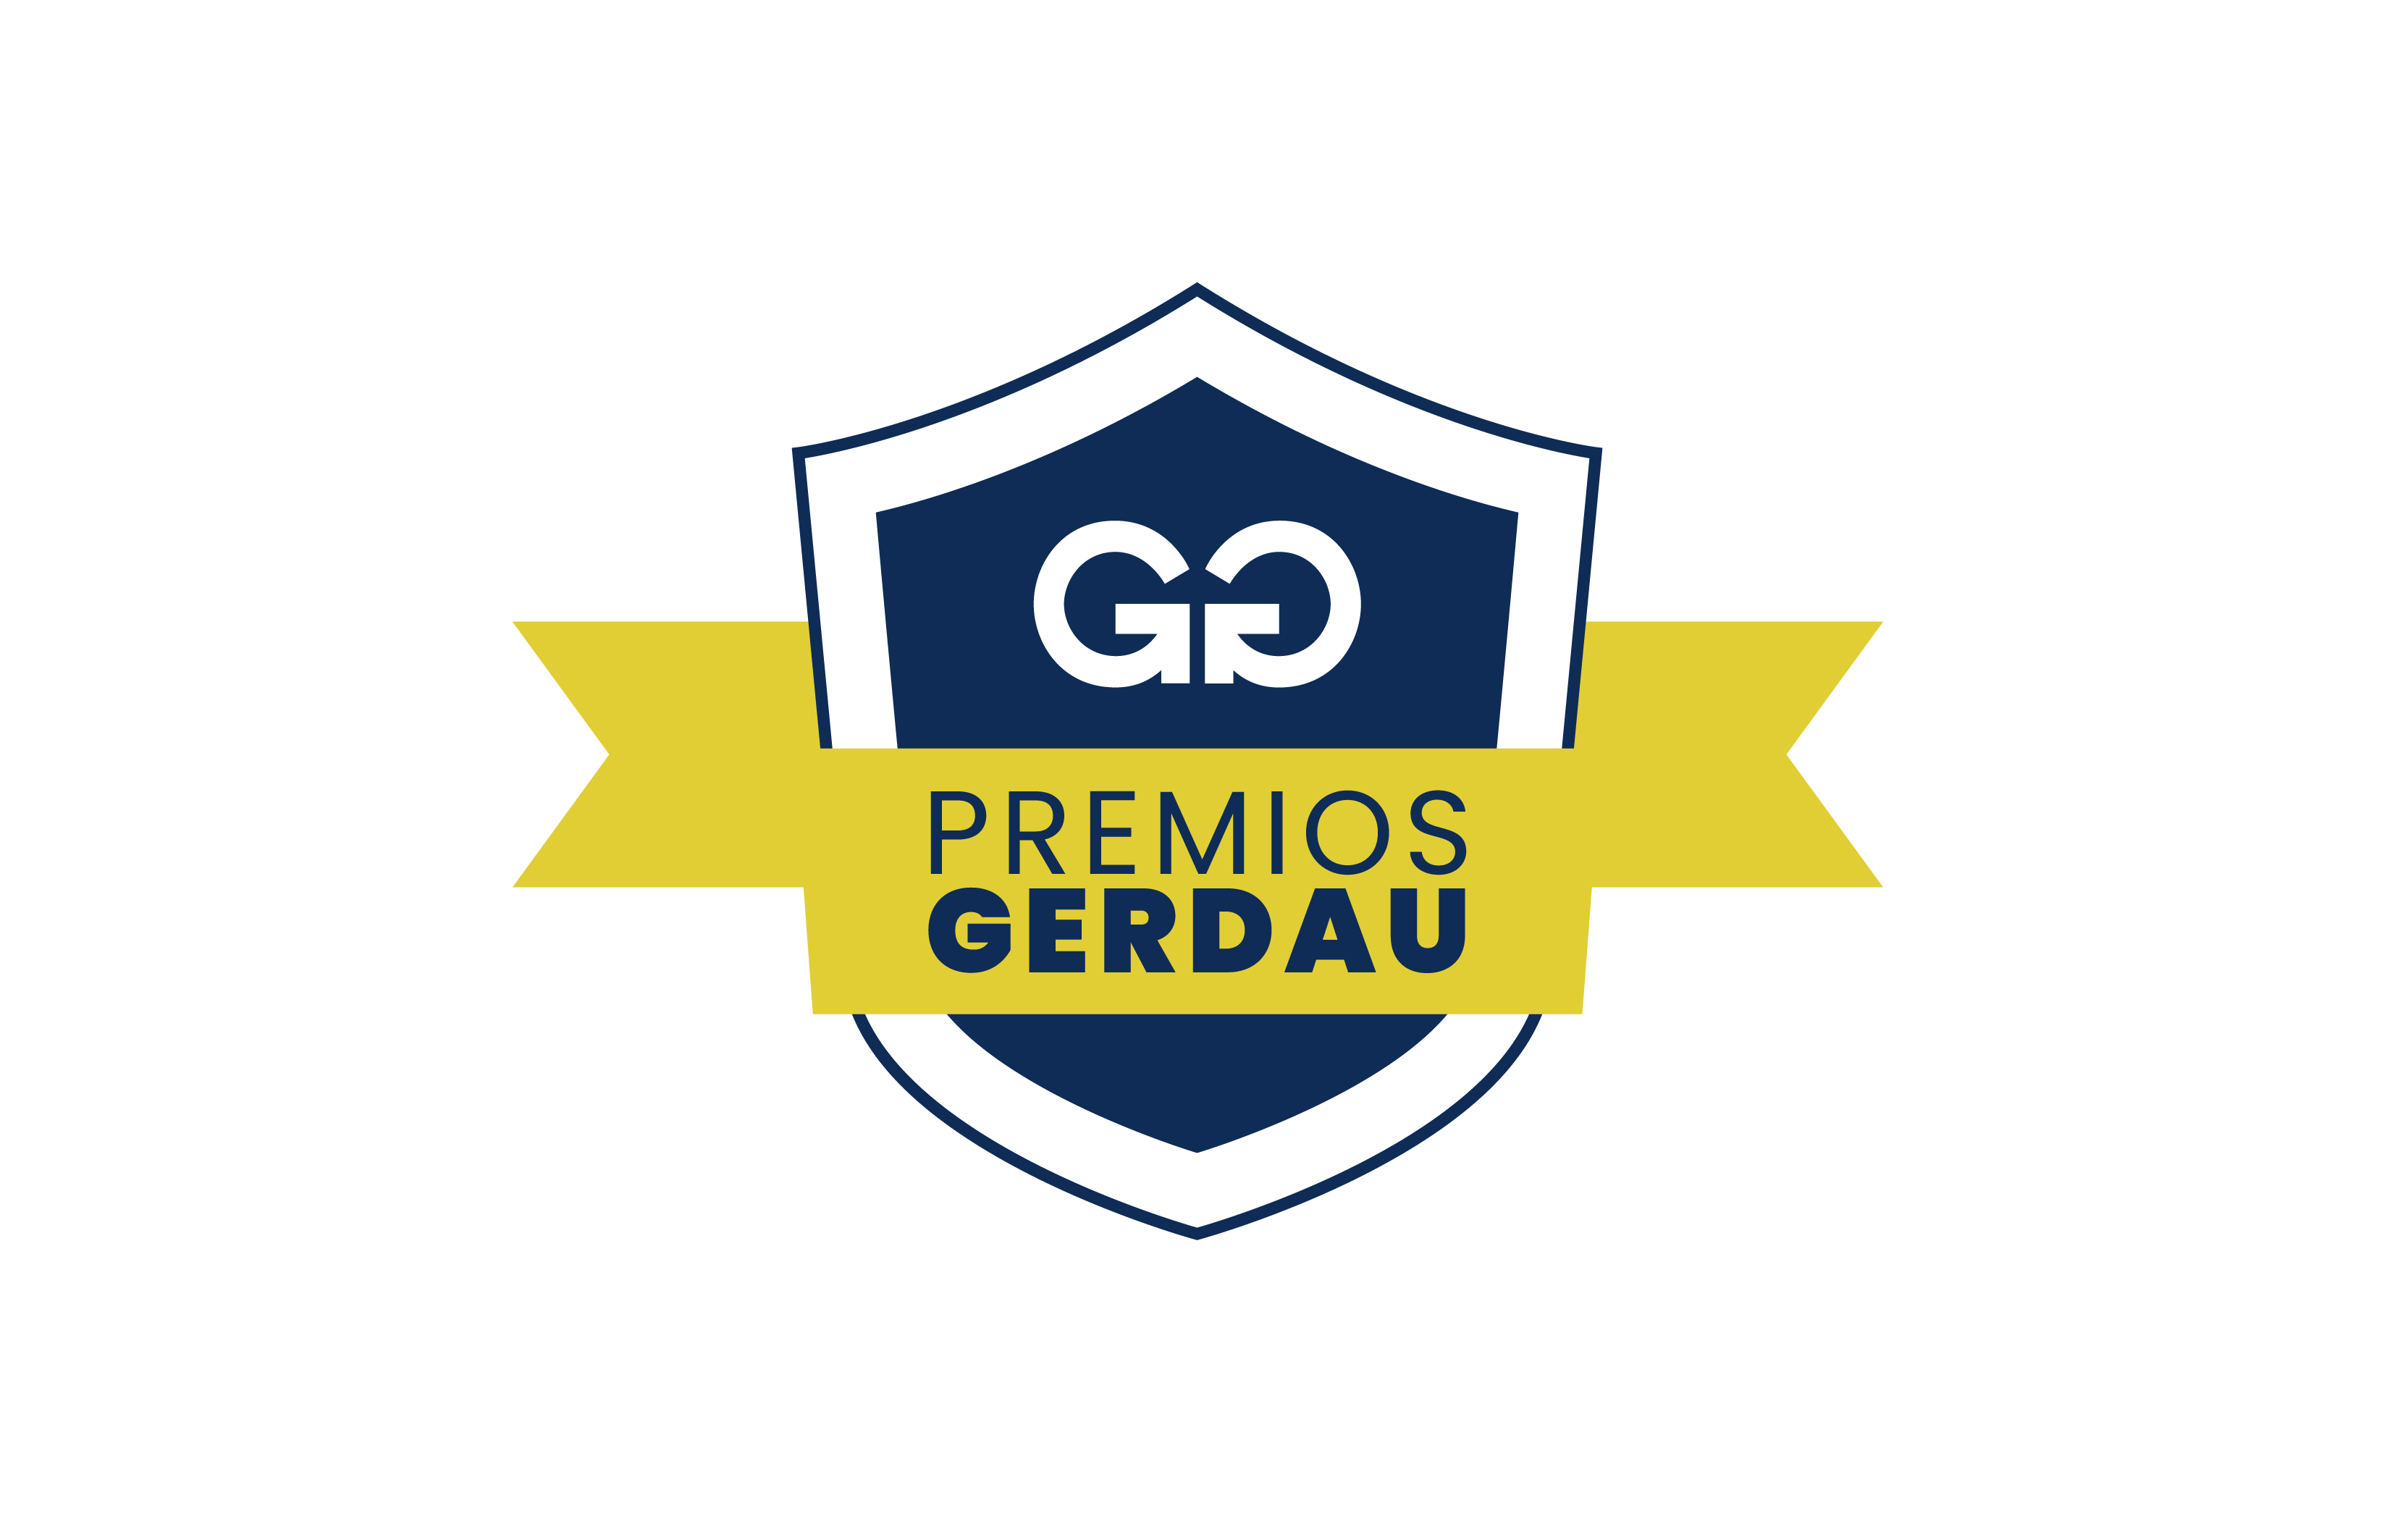 Premios Gerdau